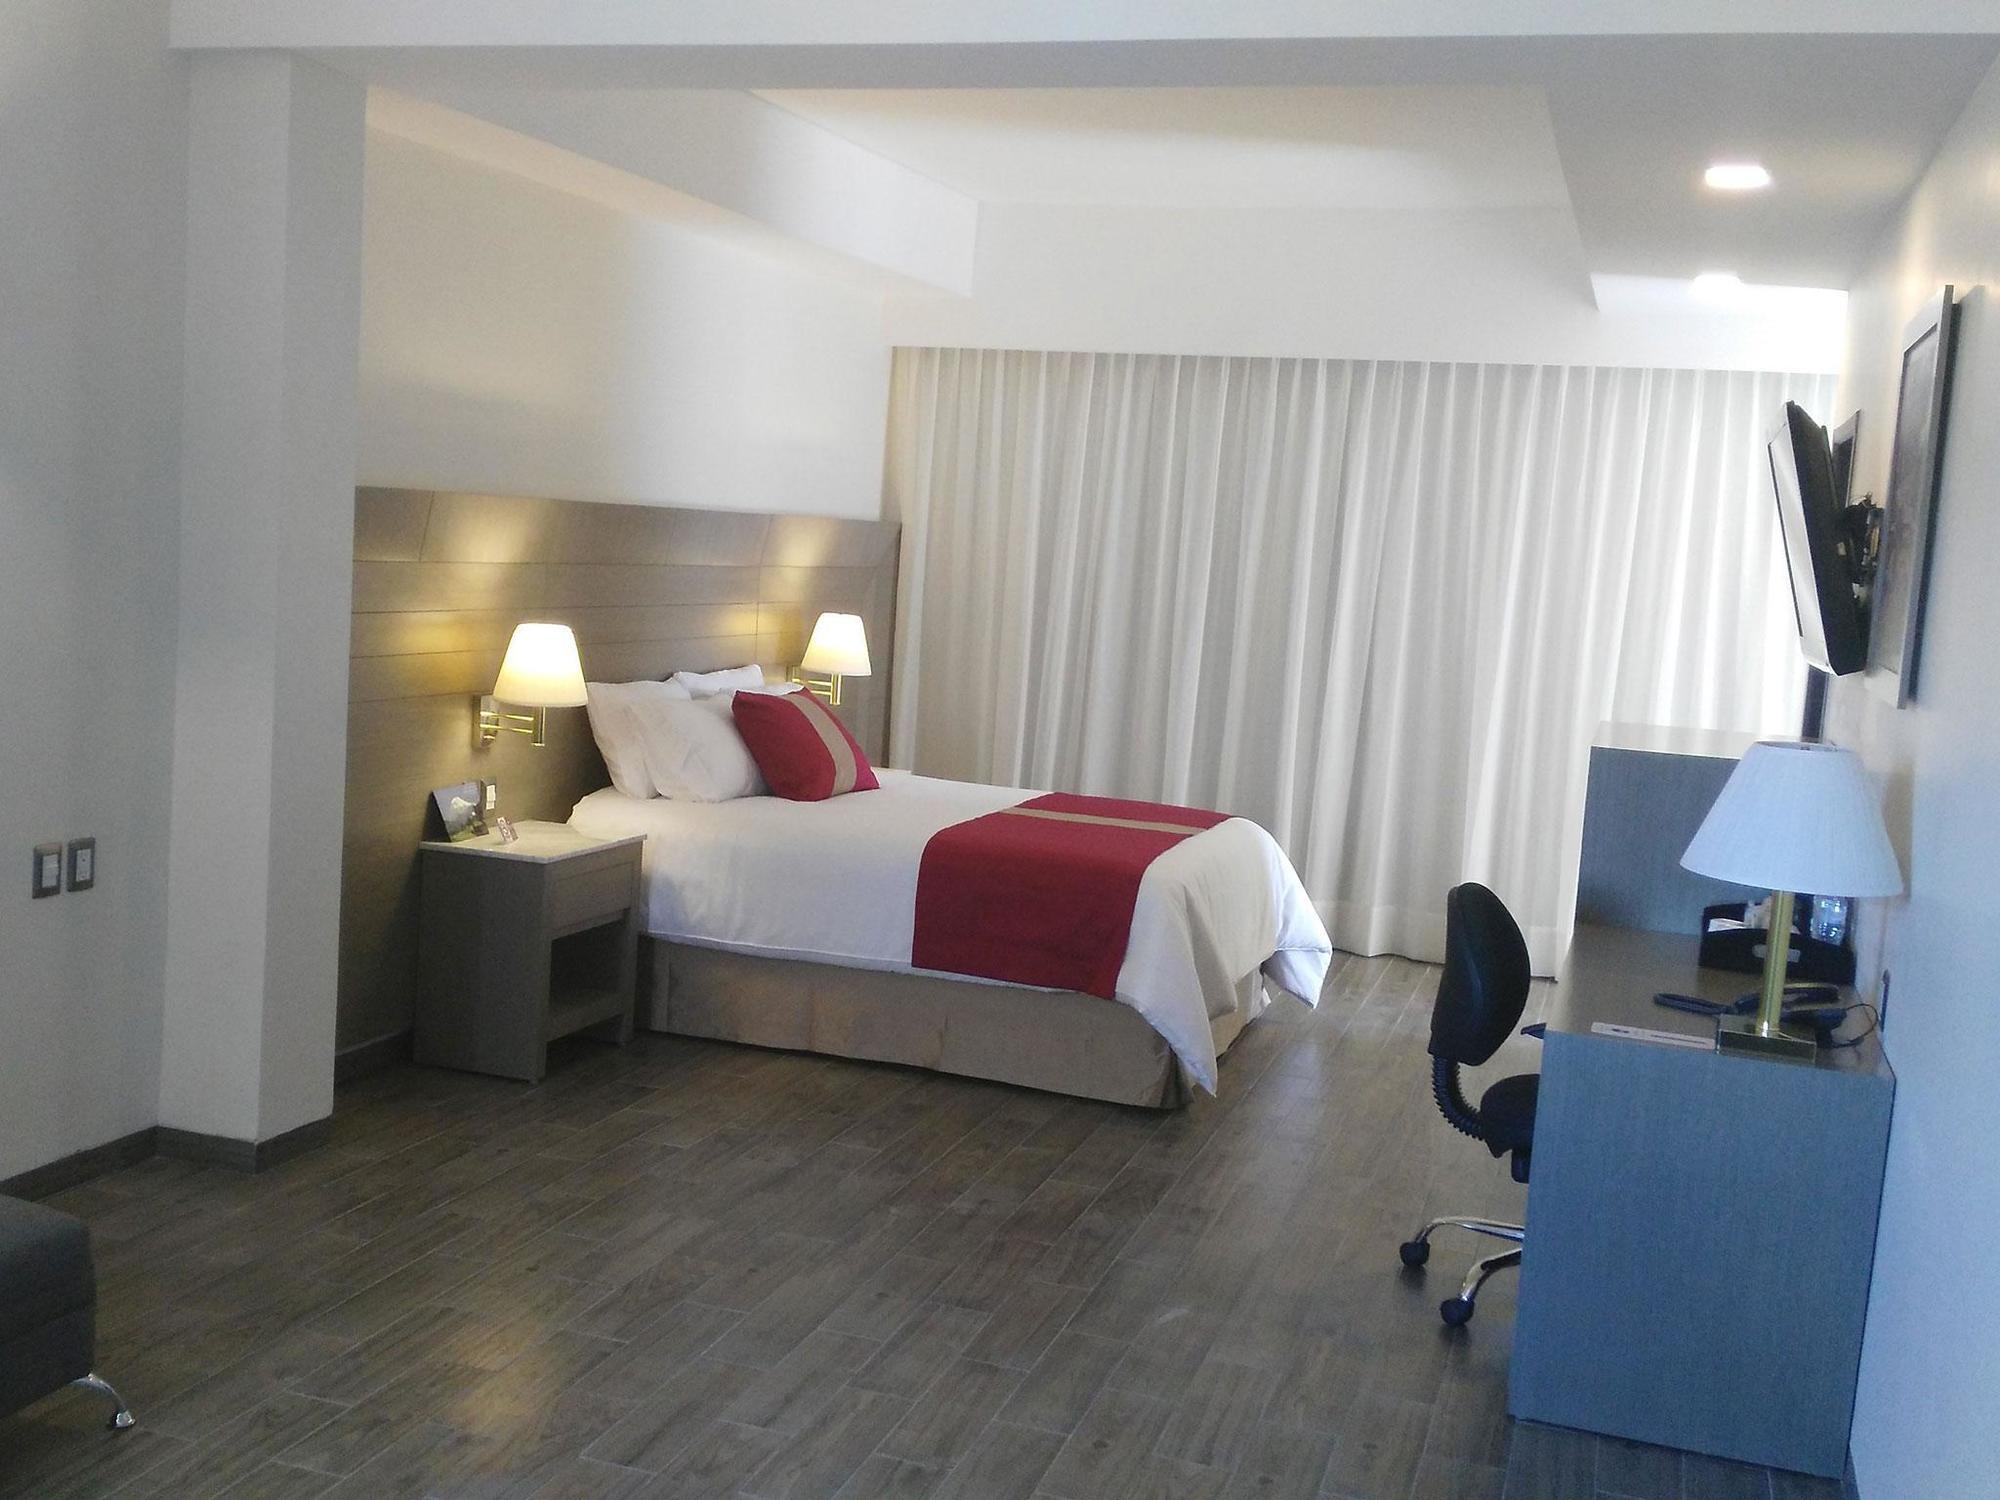 Hotel Mansur Business & Leisure Córdoba 외부 사진